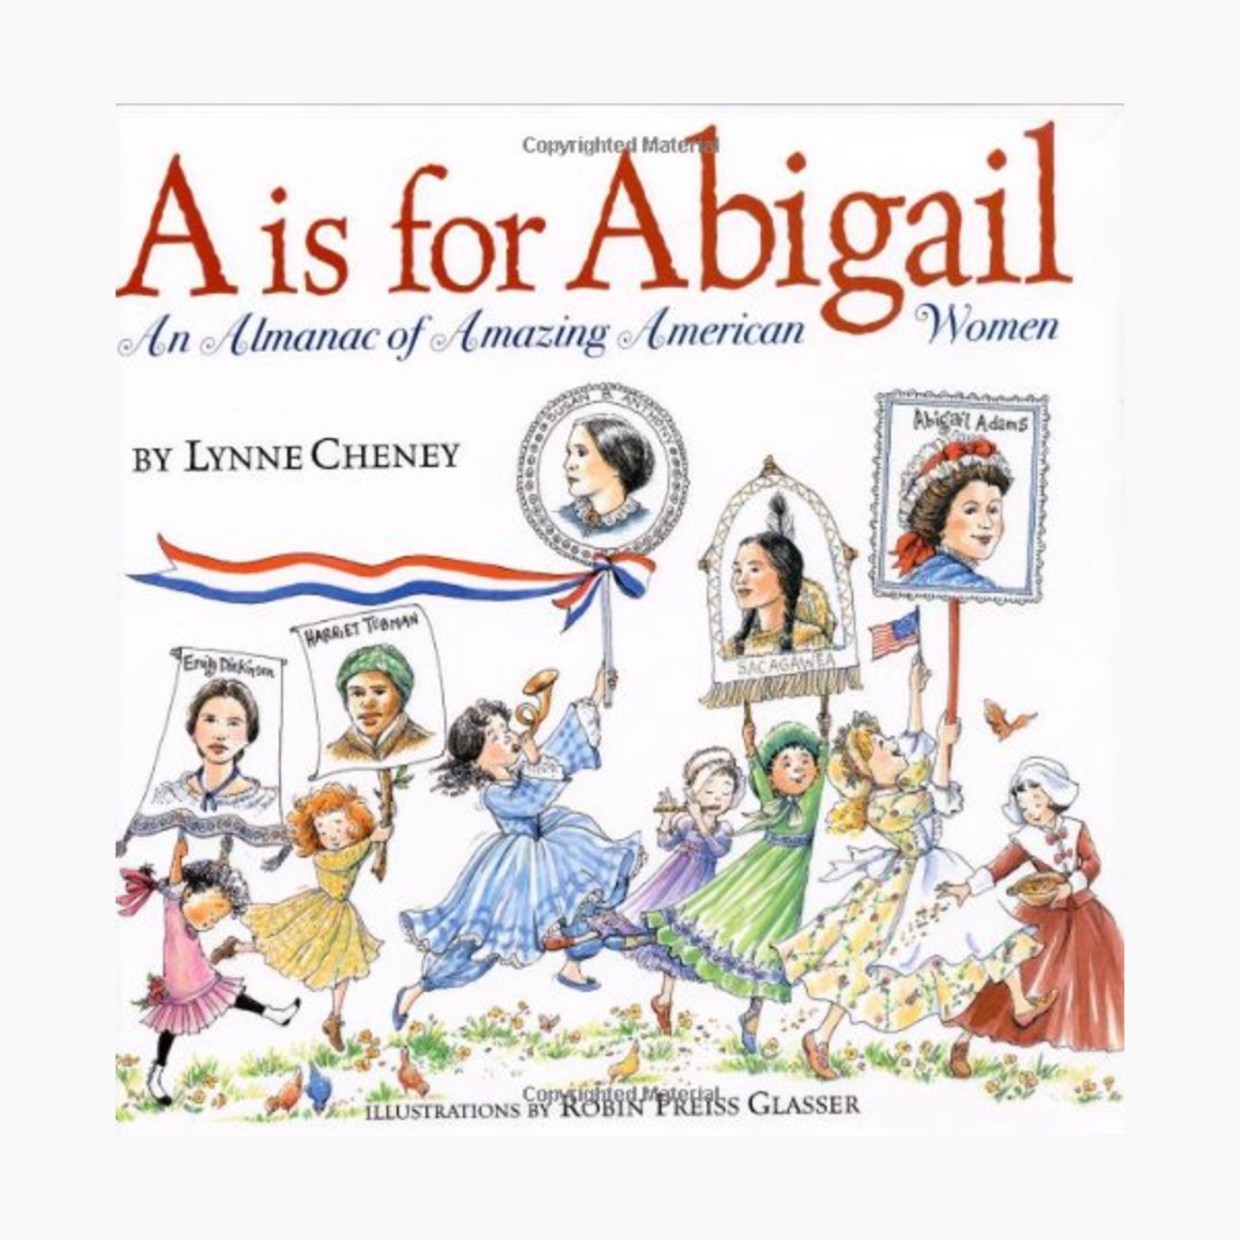 A is for Abigail: An Almanac of Amazing American Women.